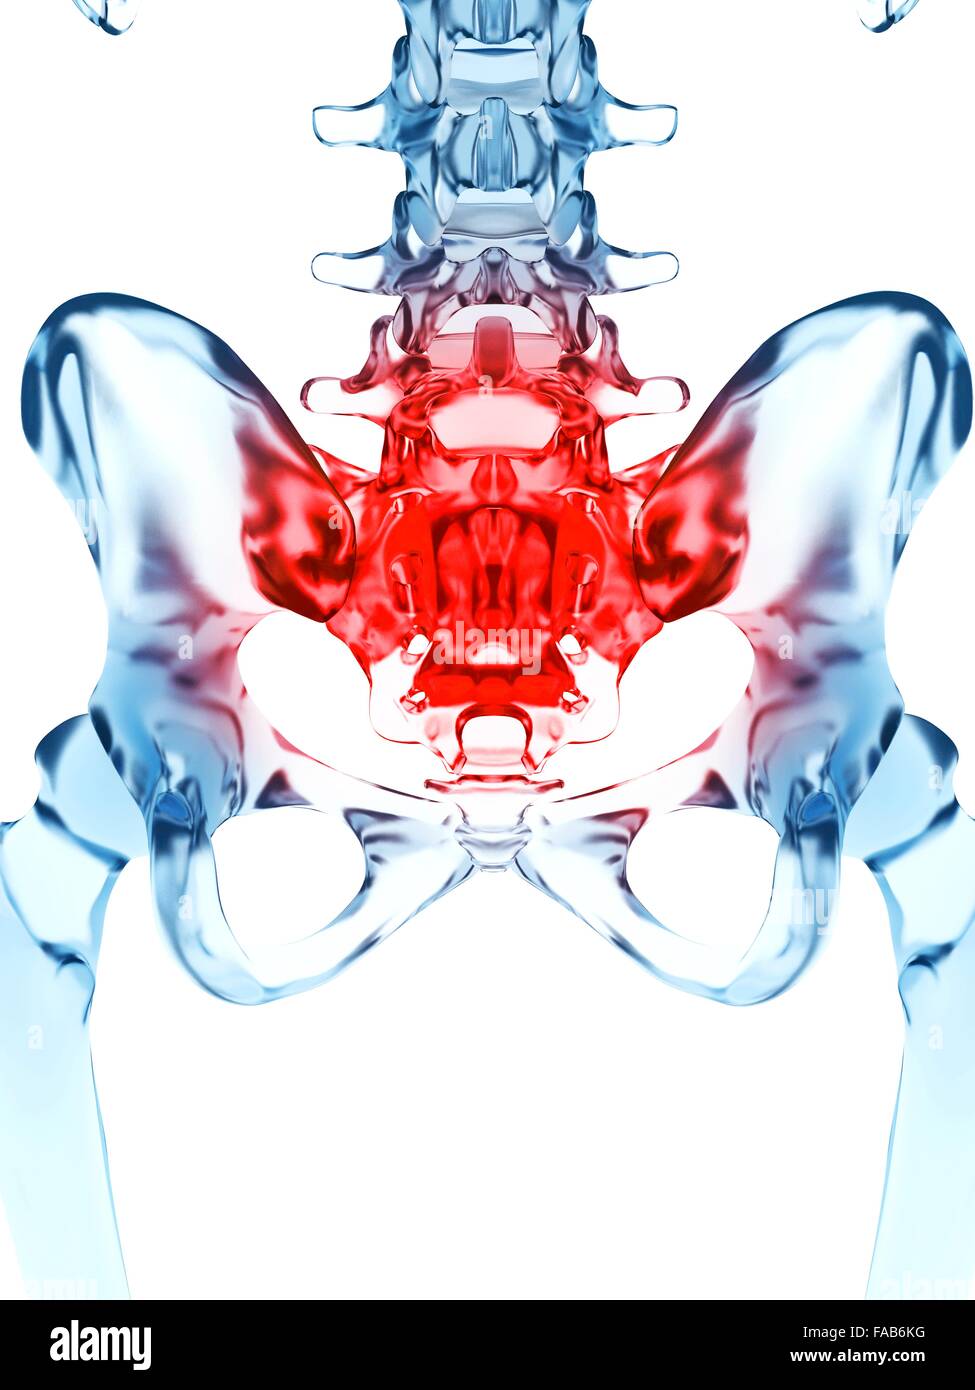 Human sacrum pain, computer illustration. Stock Photo